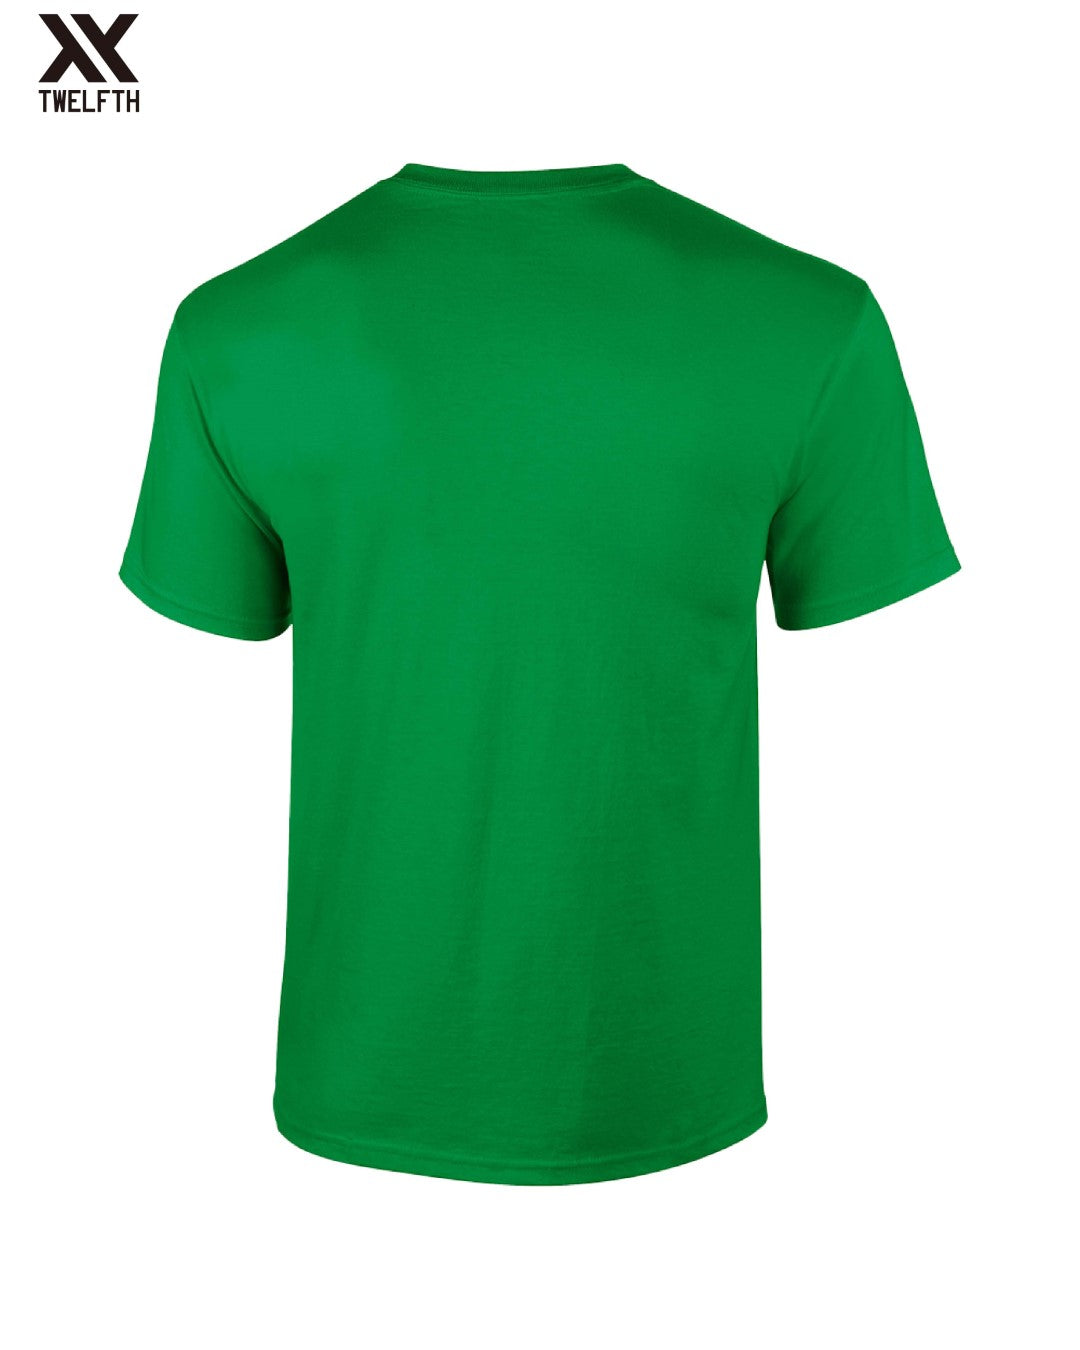 Cameroon Crest T-Shirt - Mens